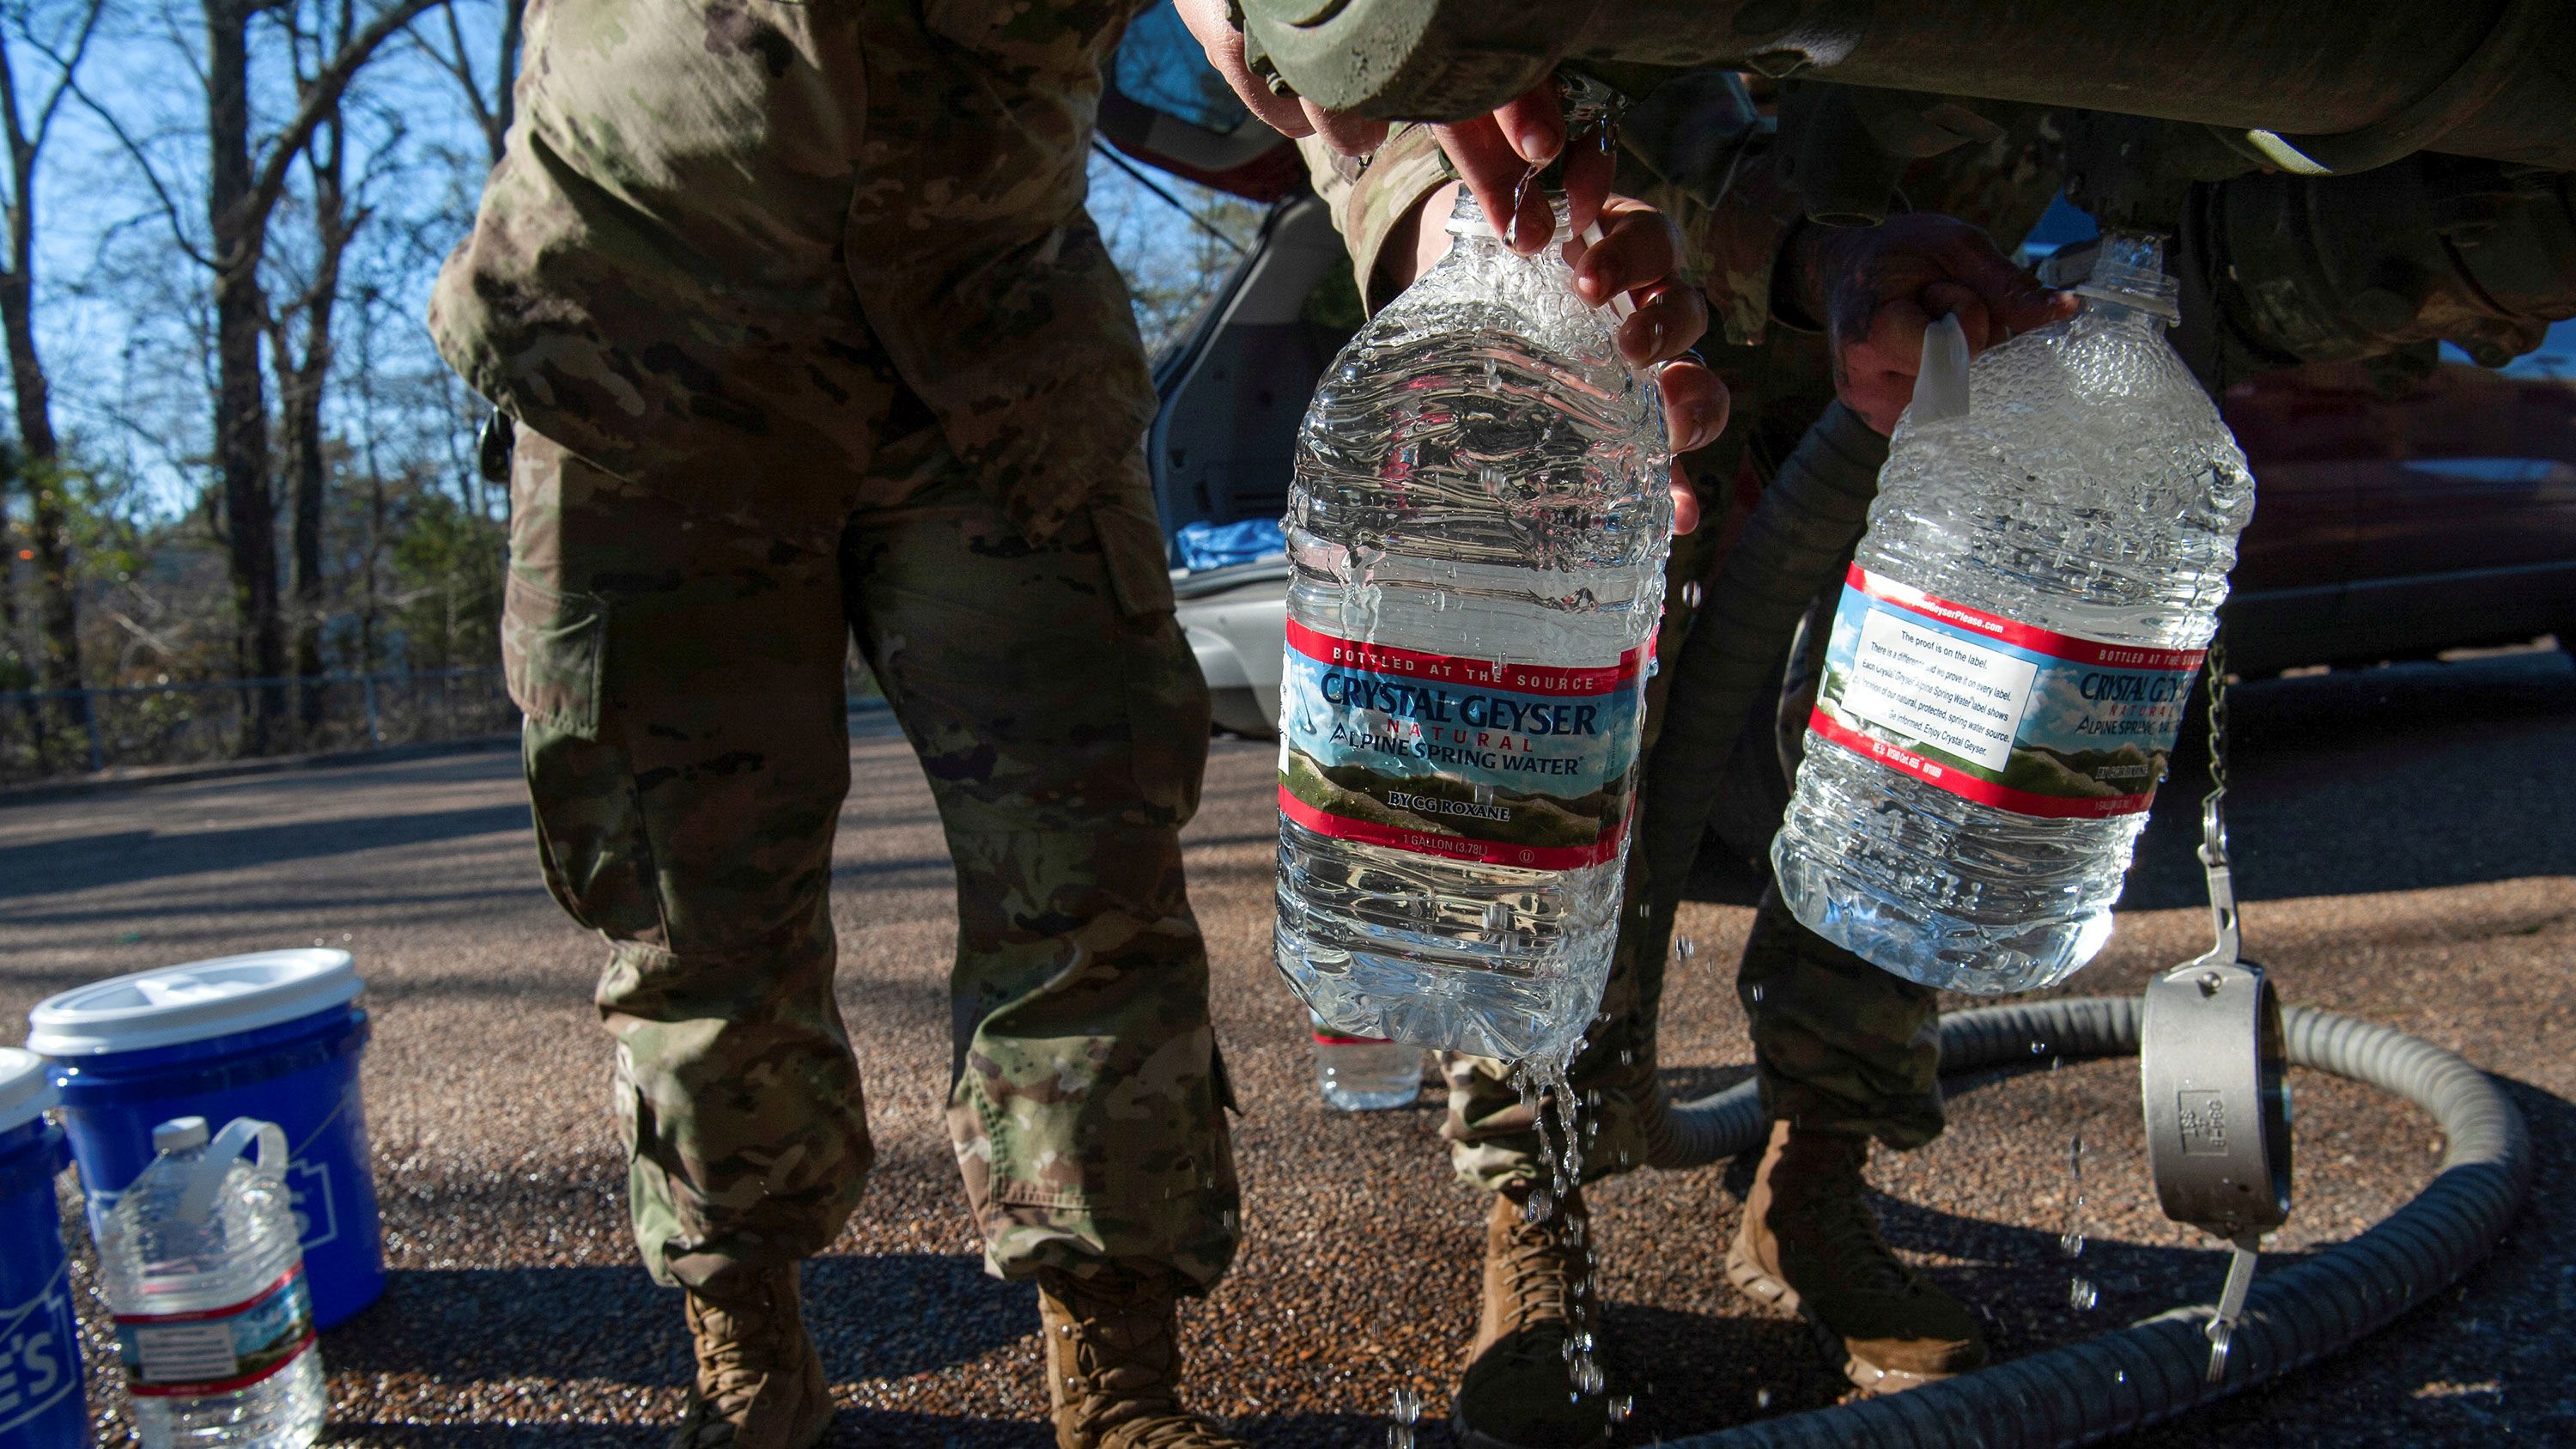 https://media.cnn.com/api/v1/images/stellar/prod/220415124008-01-jackson-mississippi-water-crisis.jpg?c=original